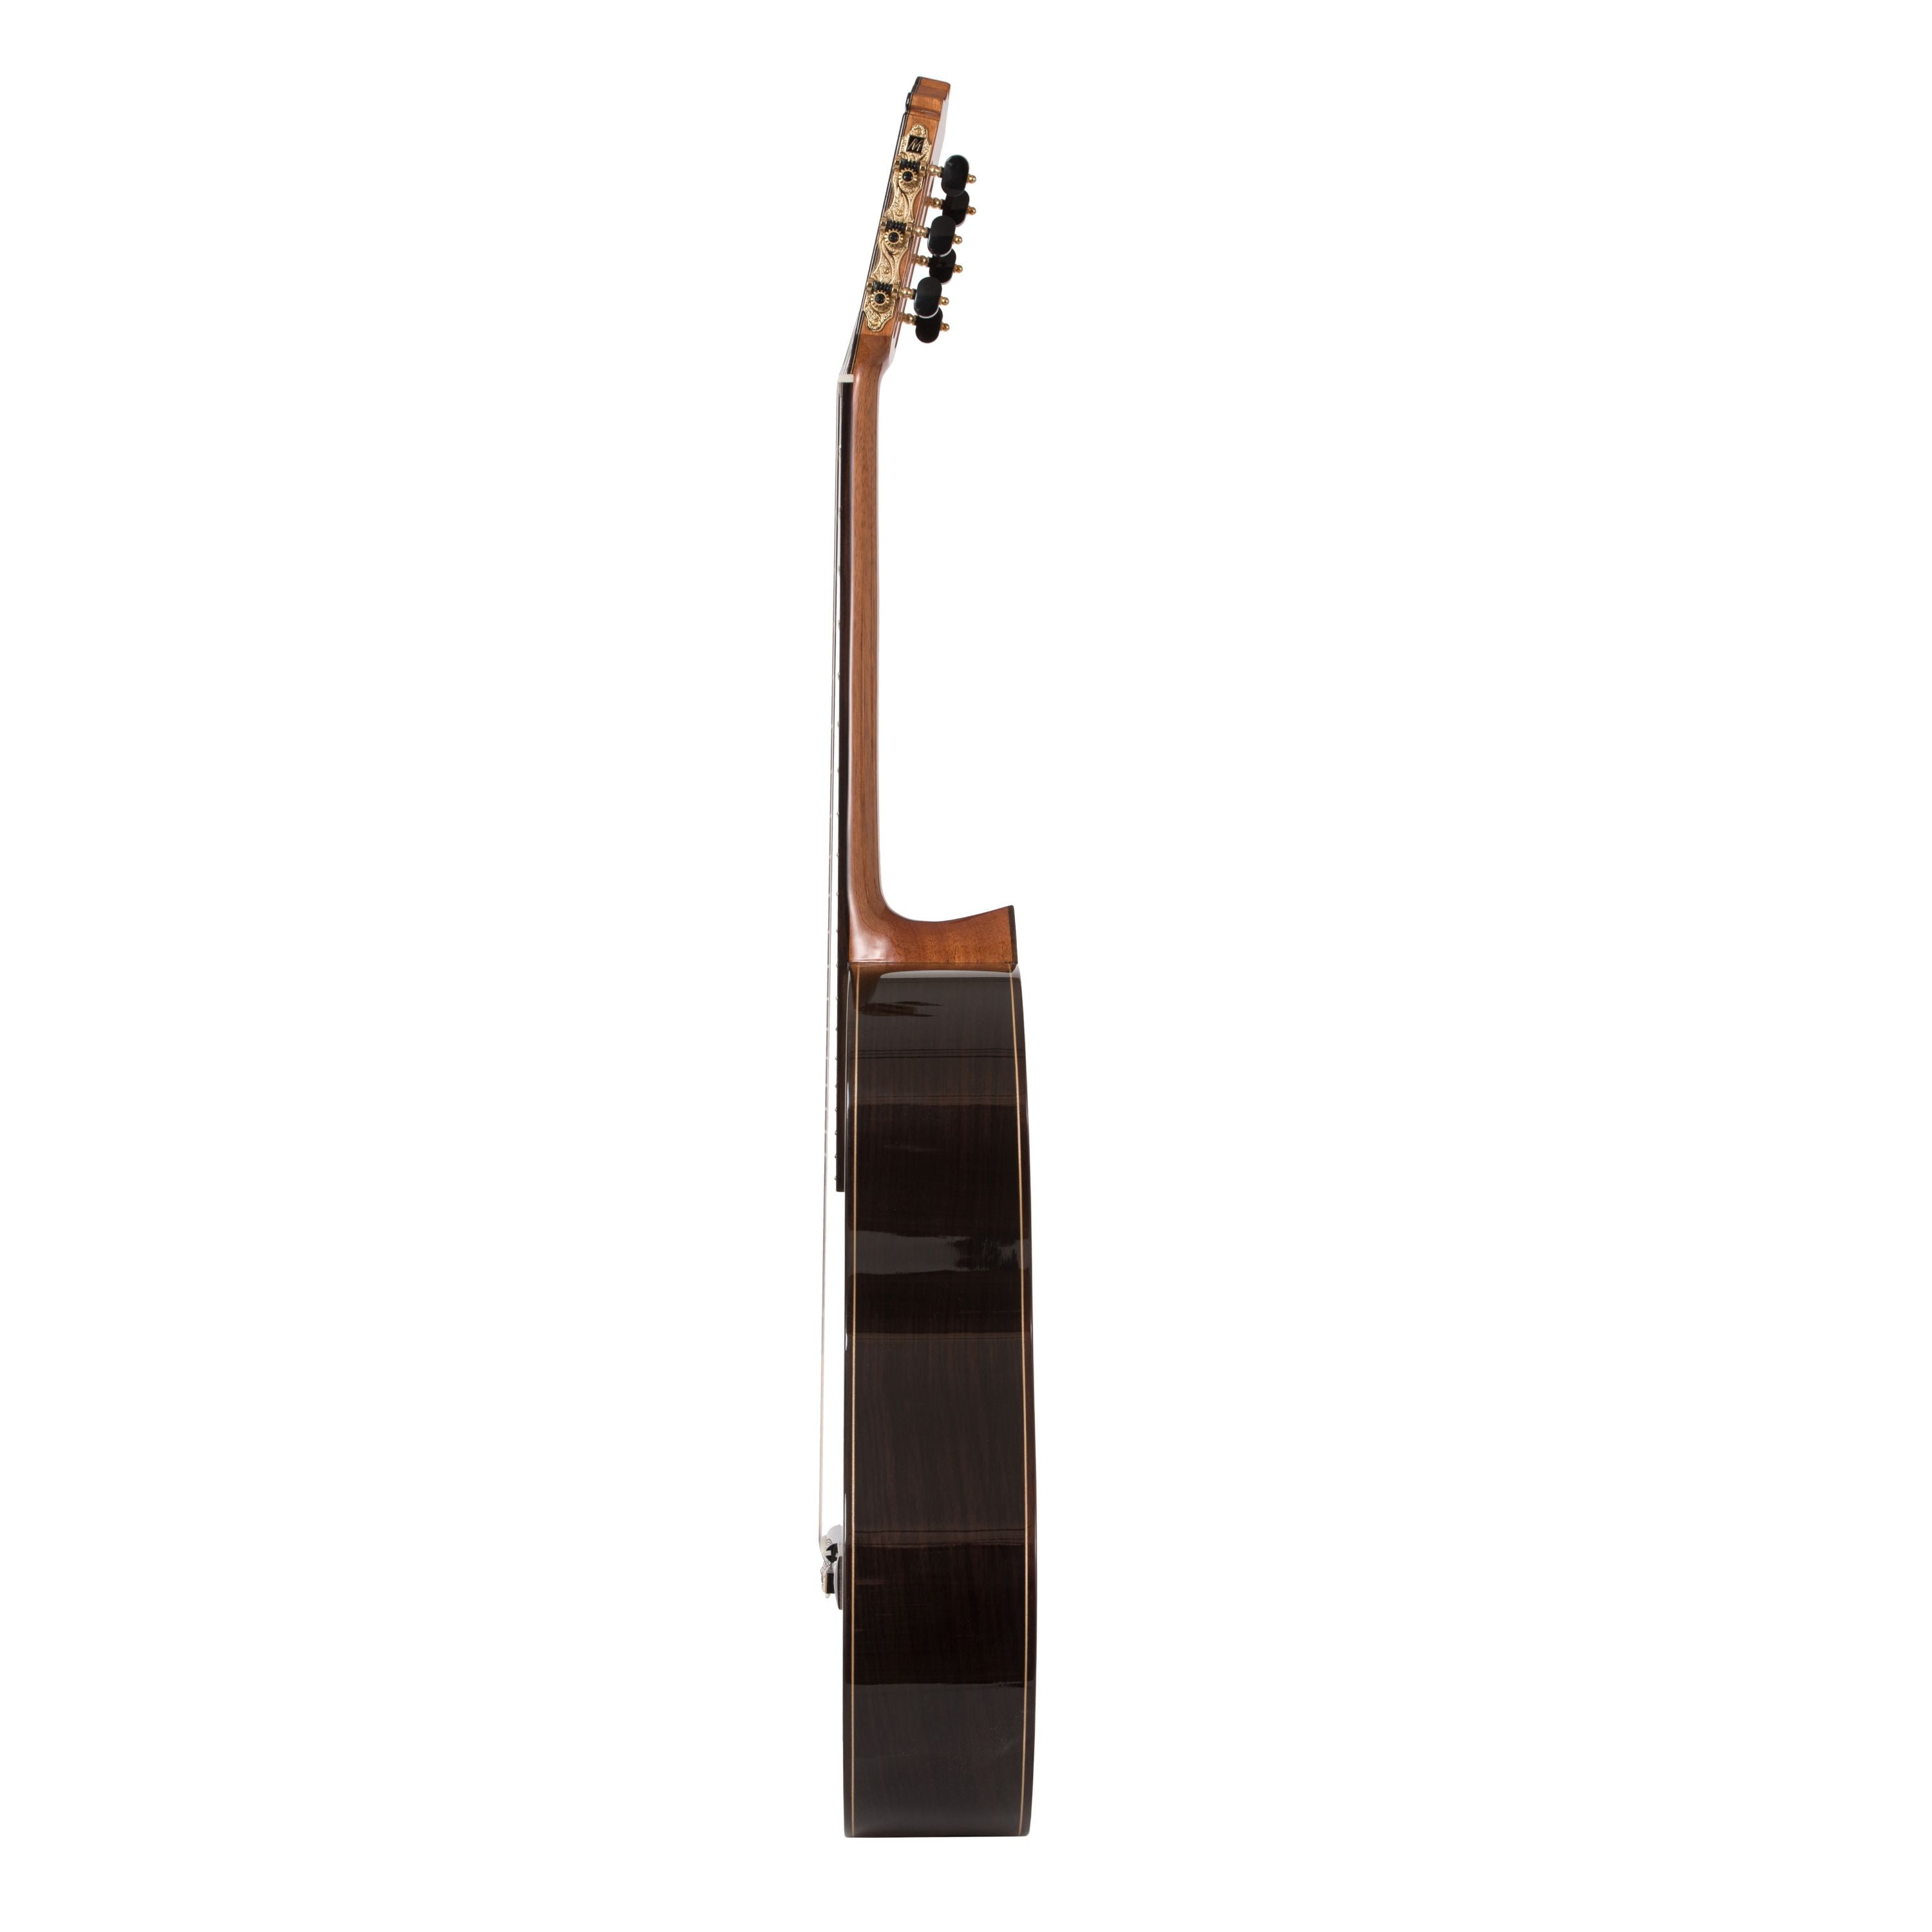 Katoh MCG80SAE Cutaway Classical Guitar w/Pickup